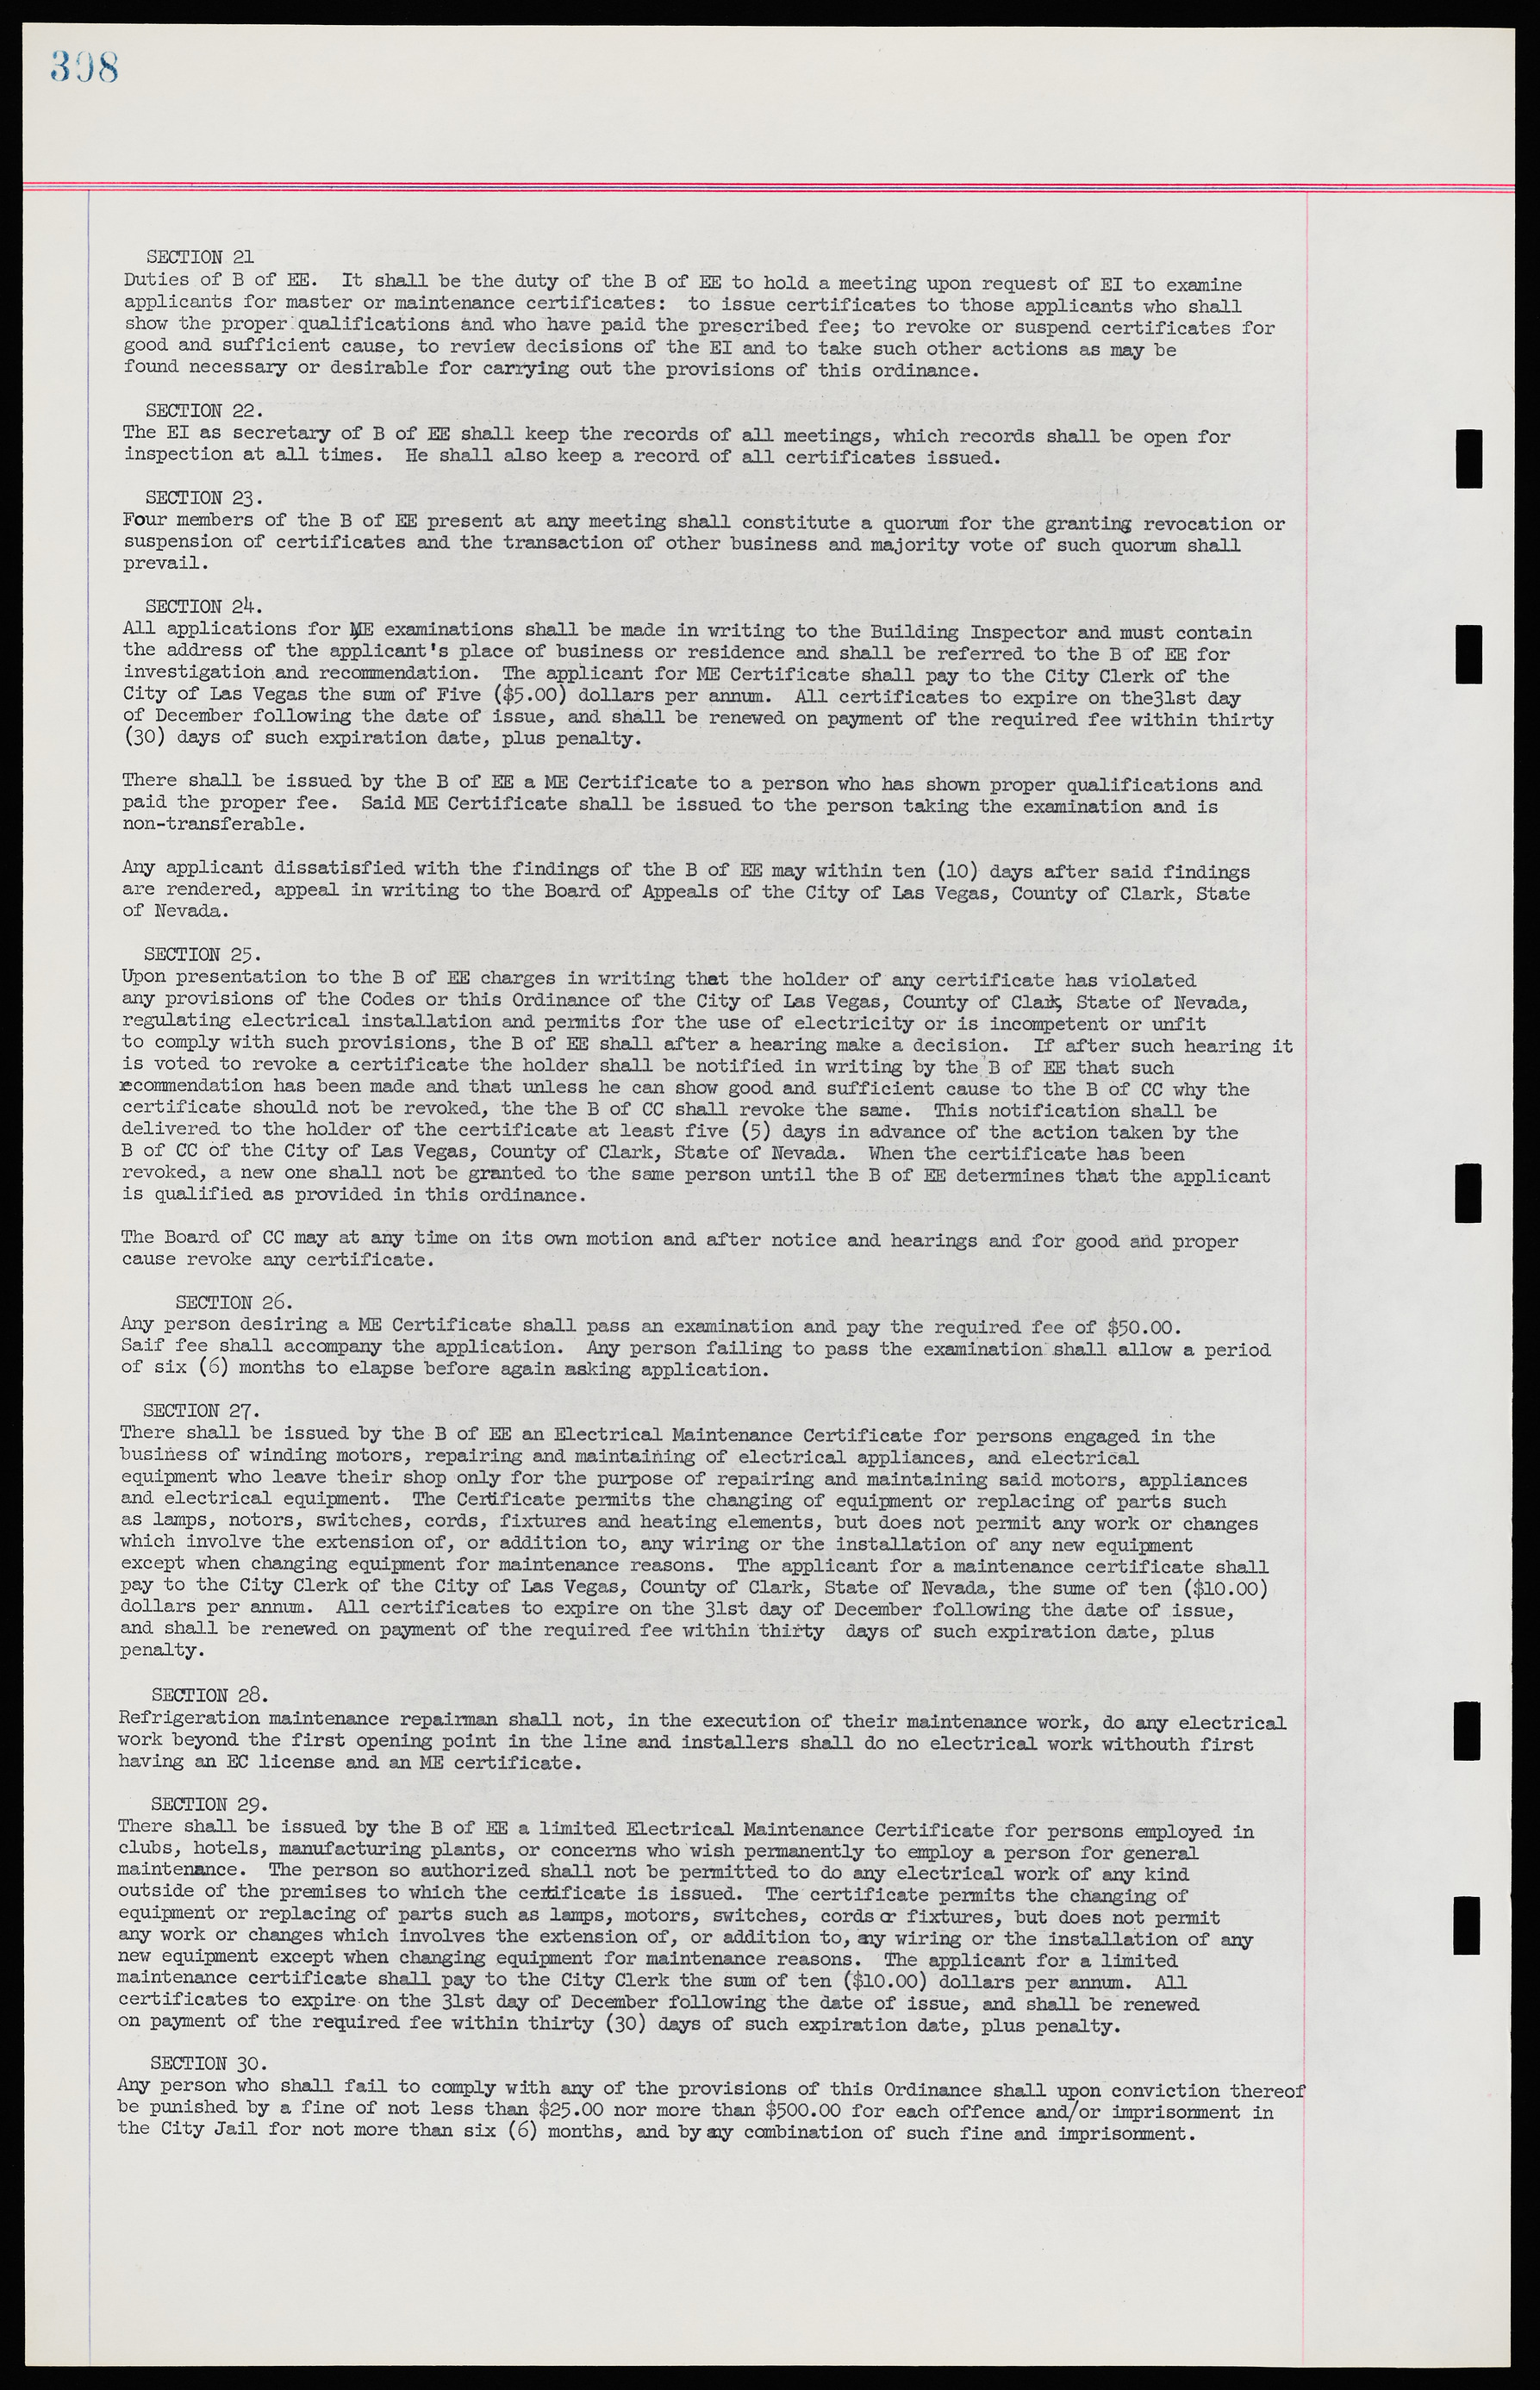 Las Vegas City Ordinances, November 13, 1950 to August 6, 1958, lvc000015-316